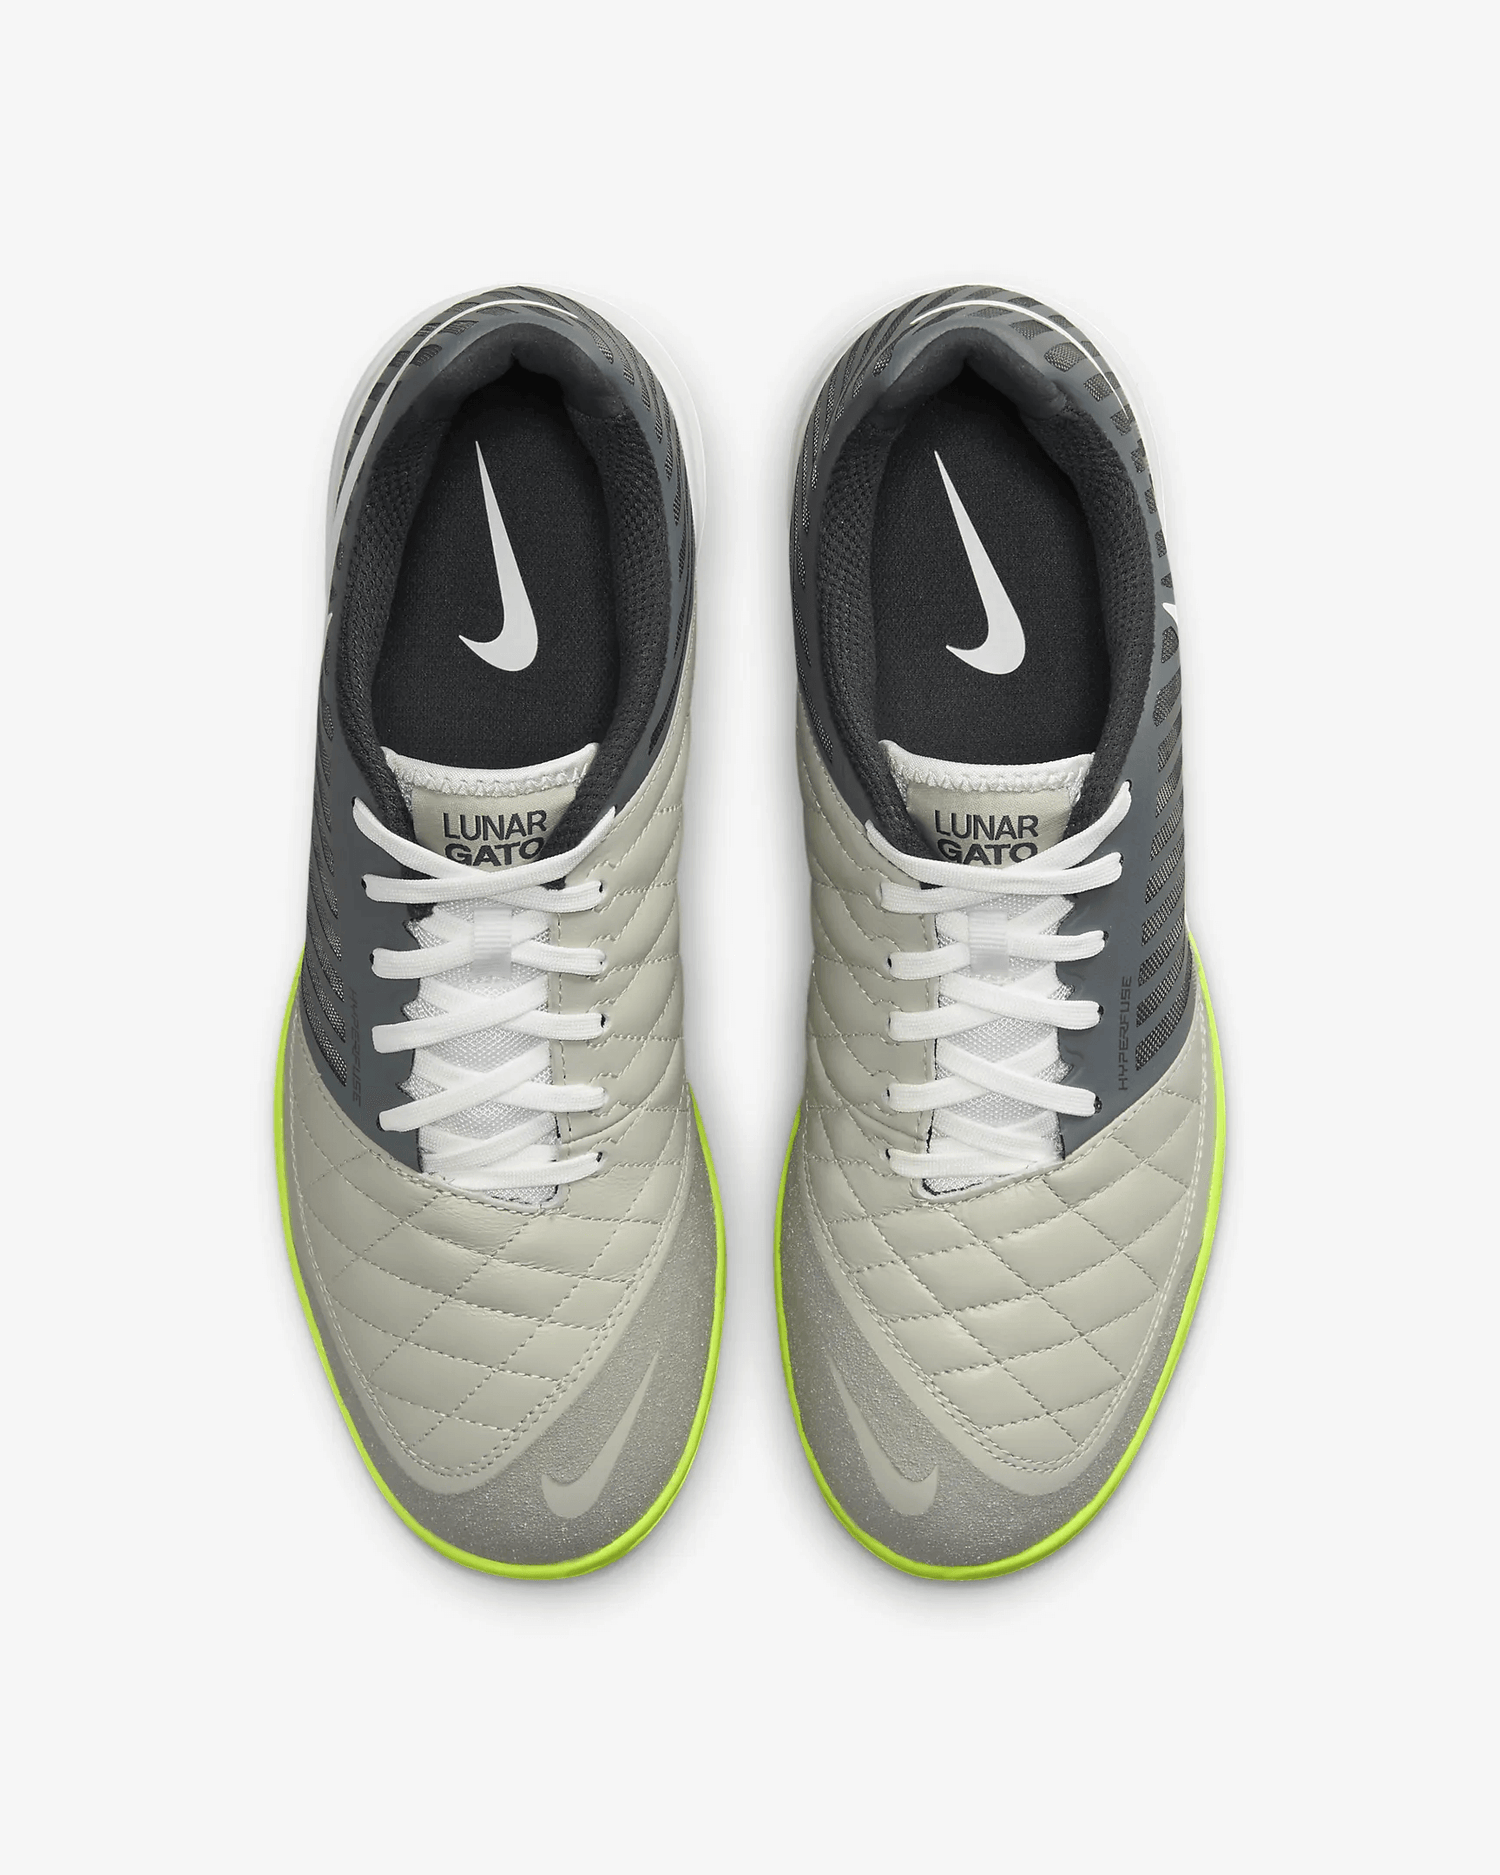 Nike Lunargato II Smoke Grey-Anthracite-Pale Grey-White (Pair - Top)